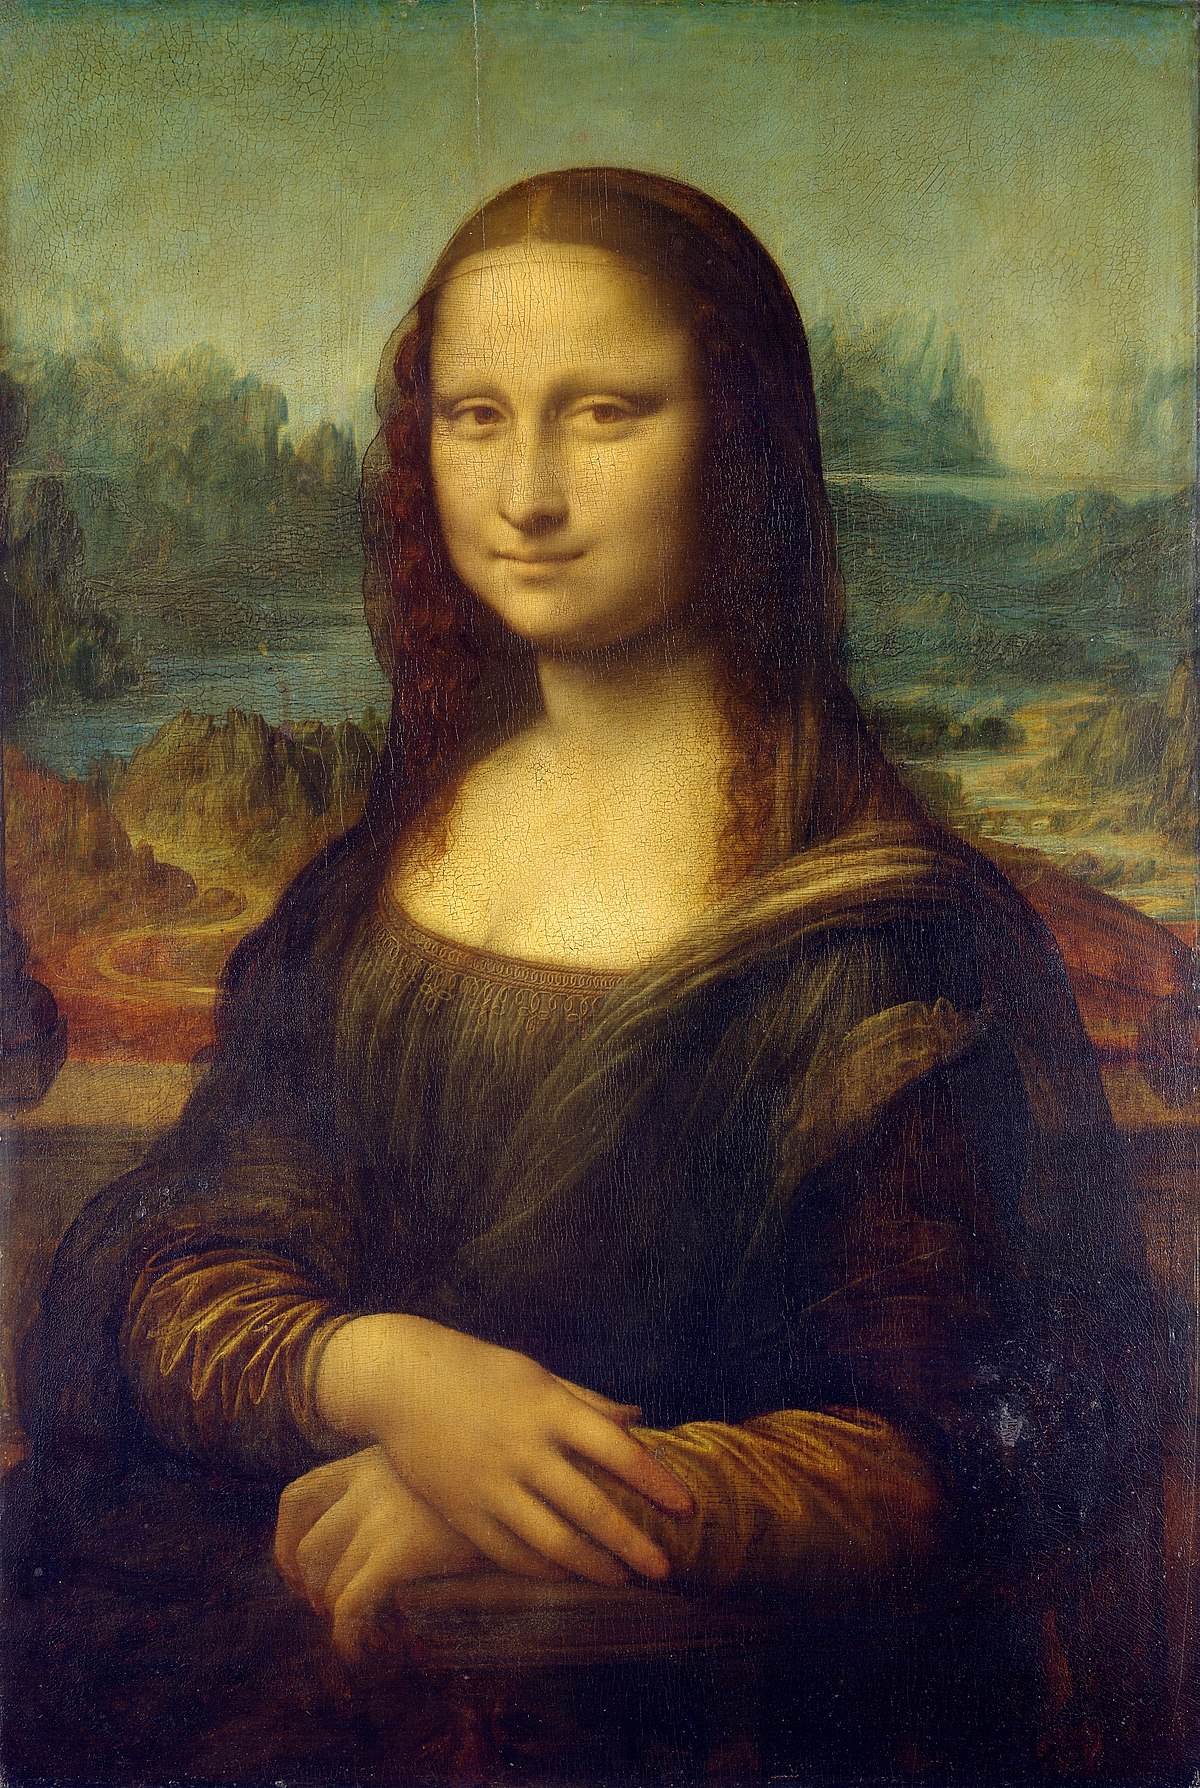 De Vinci, Léonard. 1503-1519. «Portrait de Lisa Gherardini, épouse de Francesco del Giocondo, dite Monna Lisa, la Gioconda ou la Joconde» [Huile sur toile] 